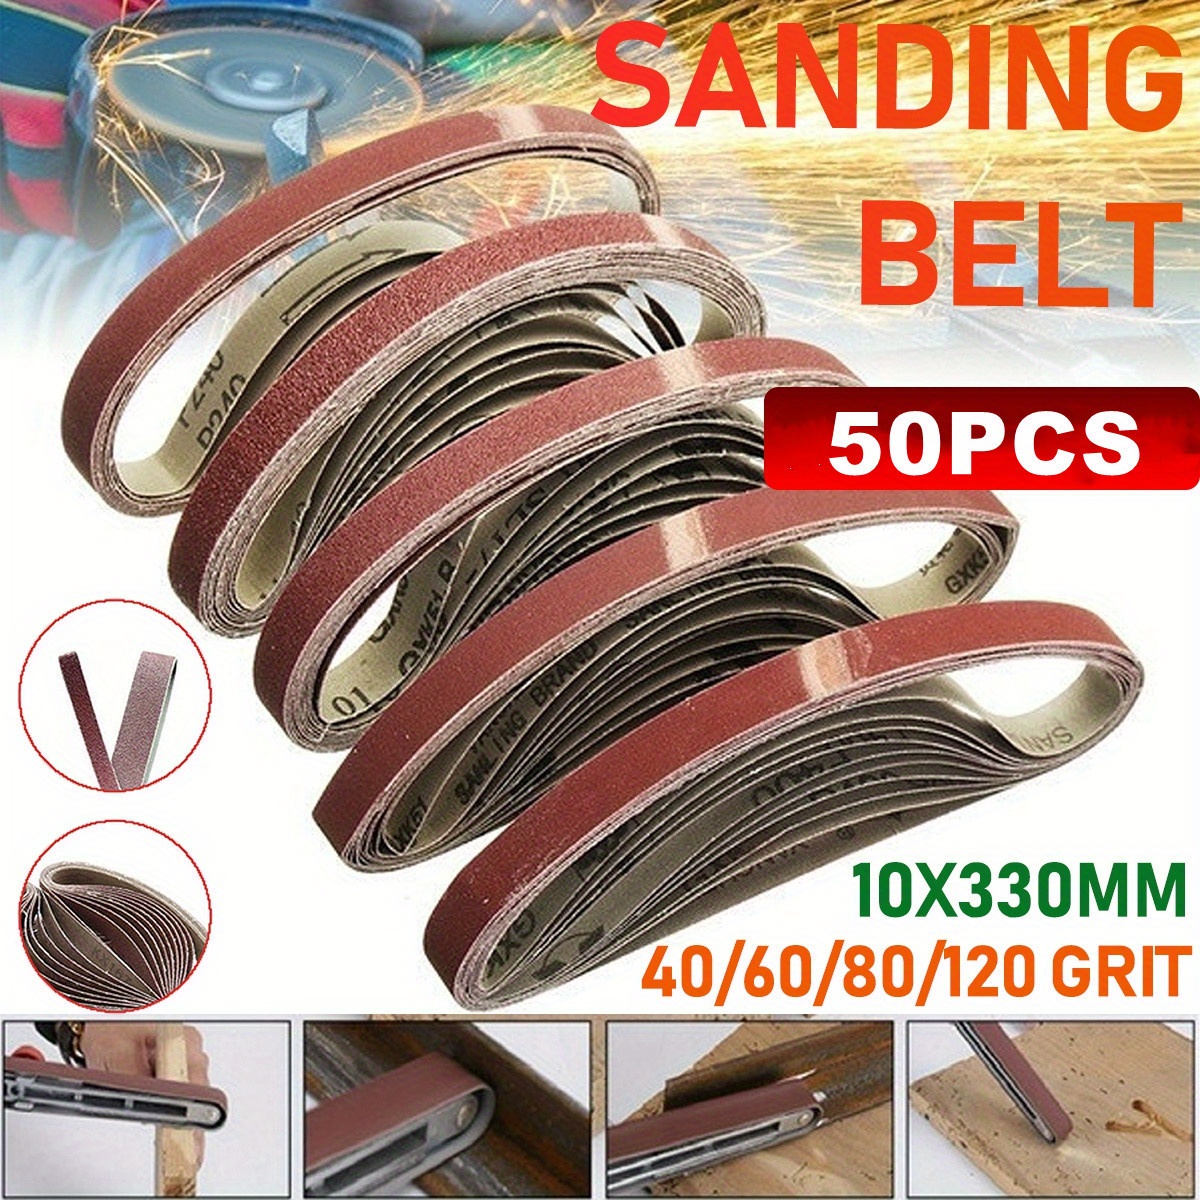 

50pcs 10x330mm (0.39x12.99inch) Sanding Belt For Belt Sander Polishing Machine 40/60/80/120 Grit